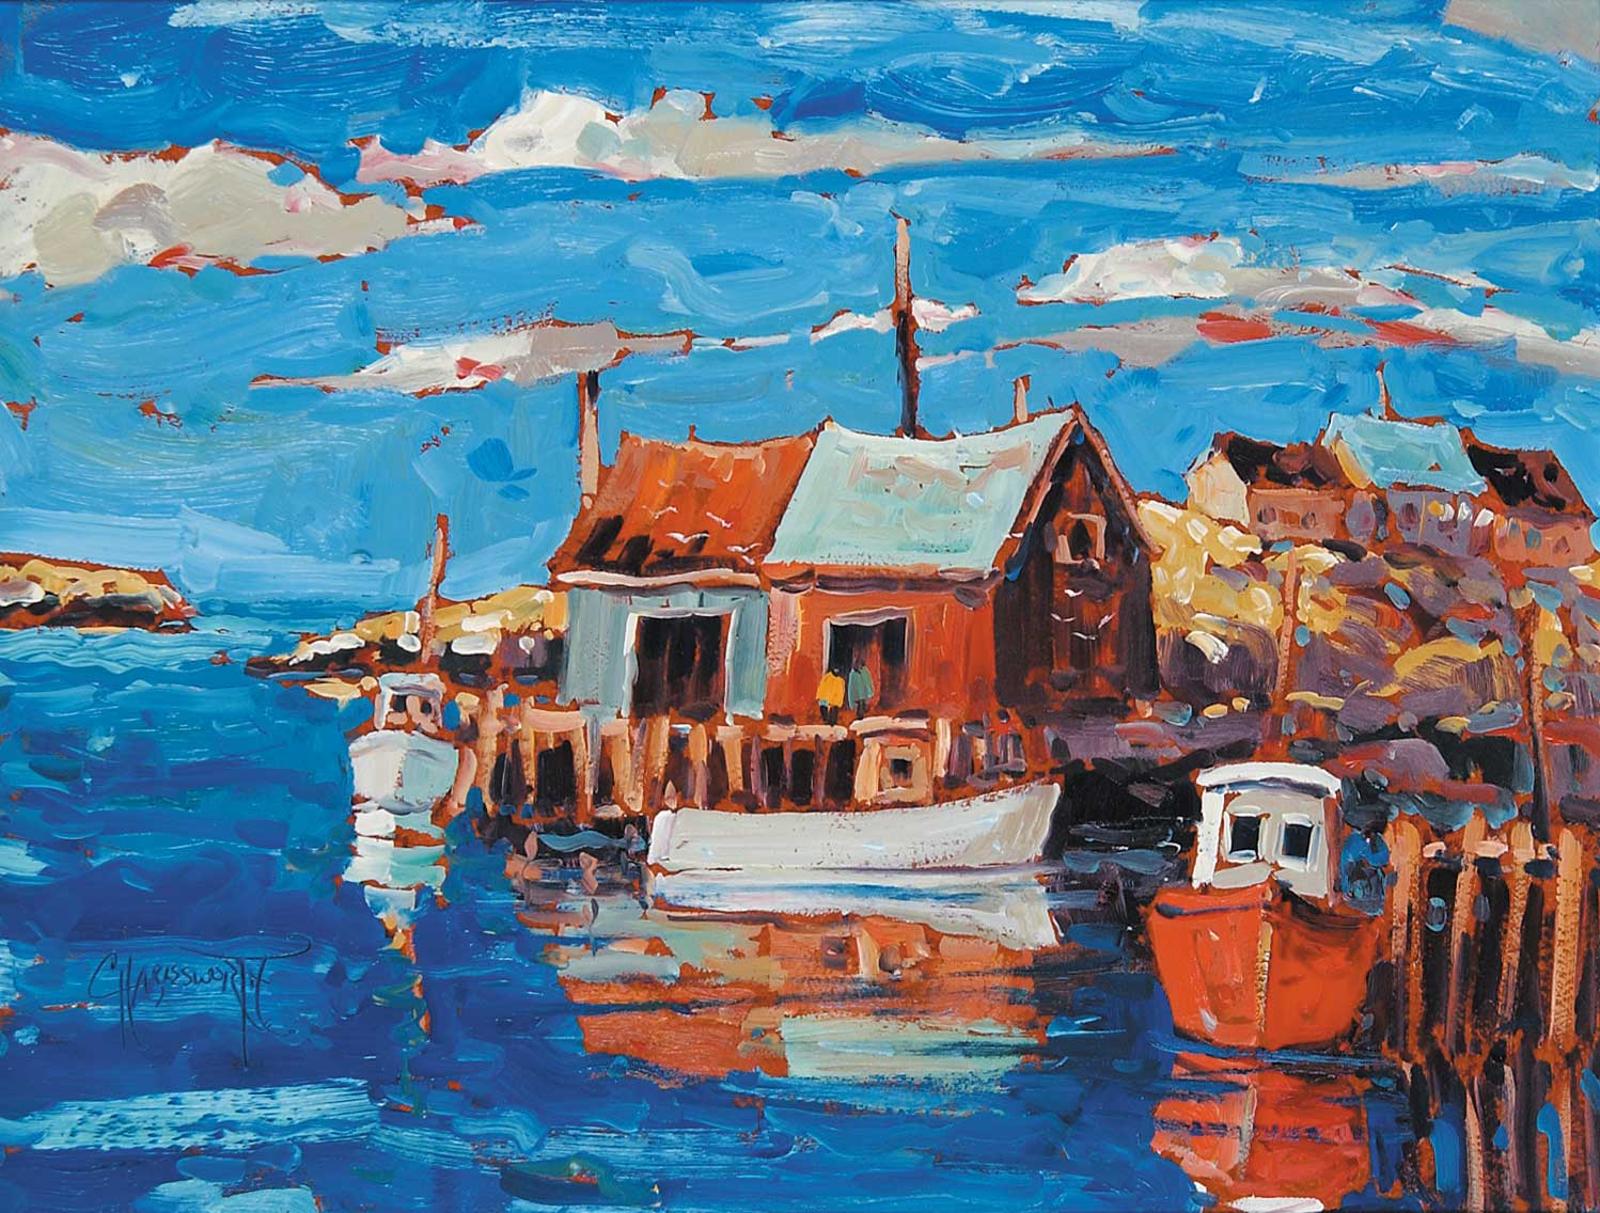 Rod Charlesworth (1955) - Blue Spring, Peggys Cove